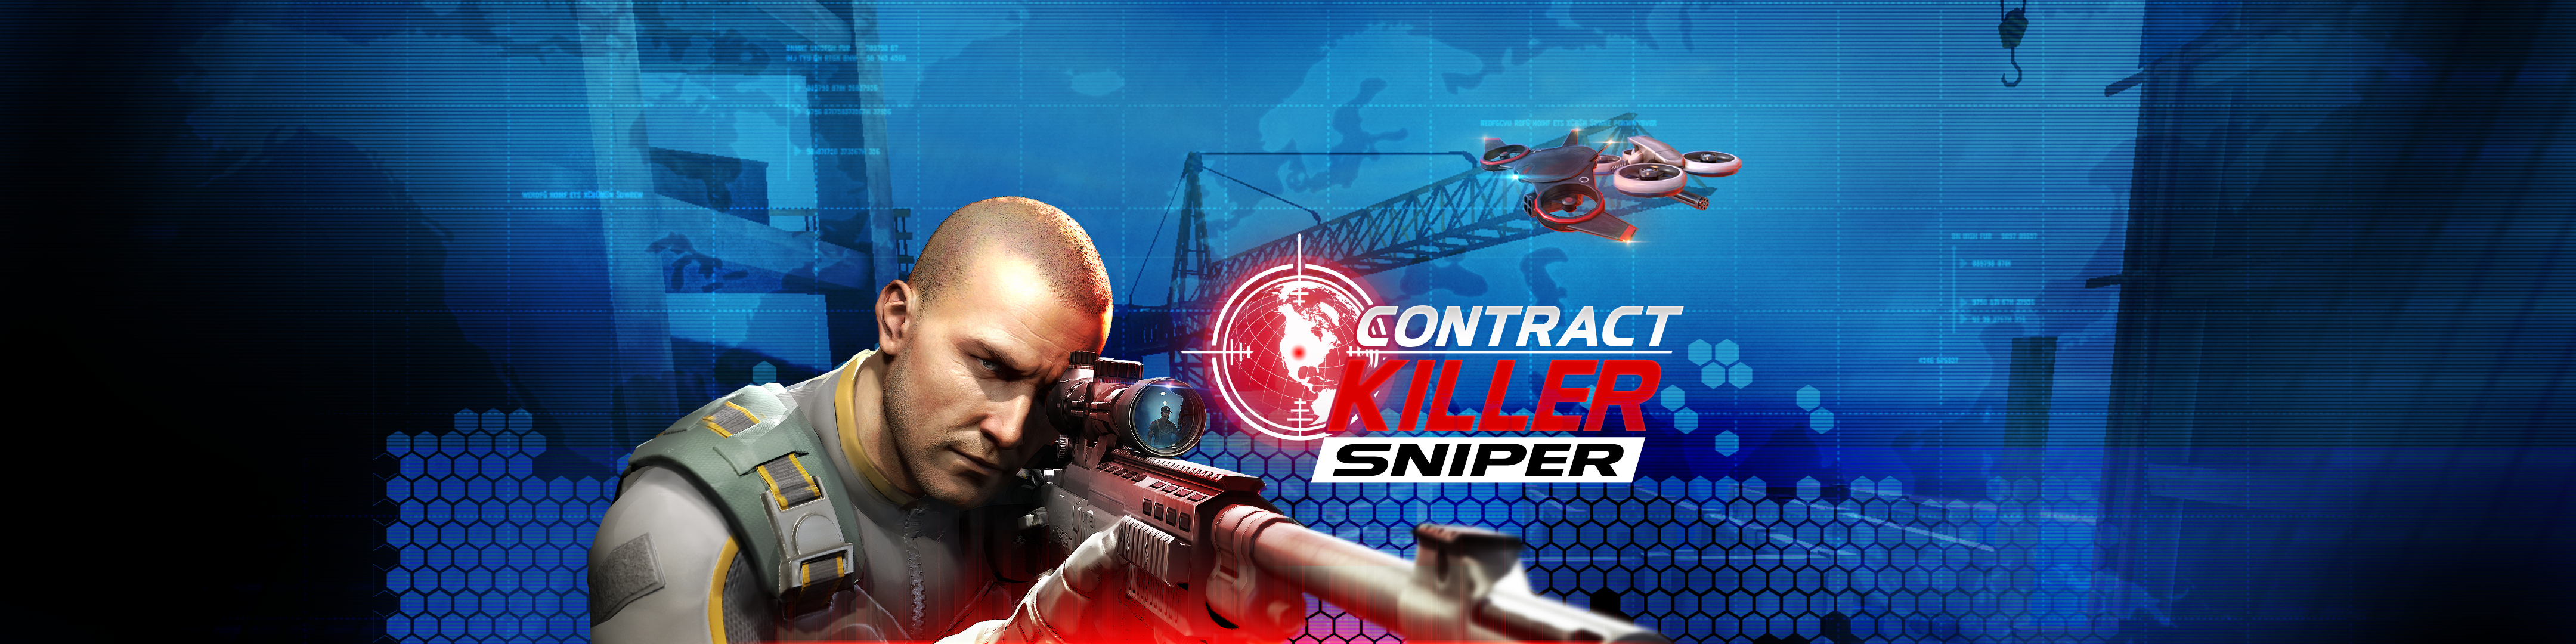 contract killer sniper pvp